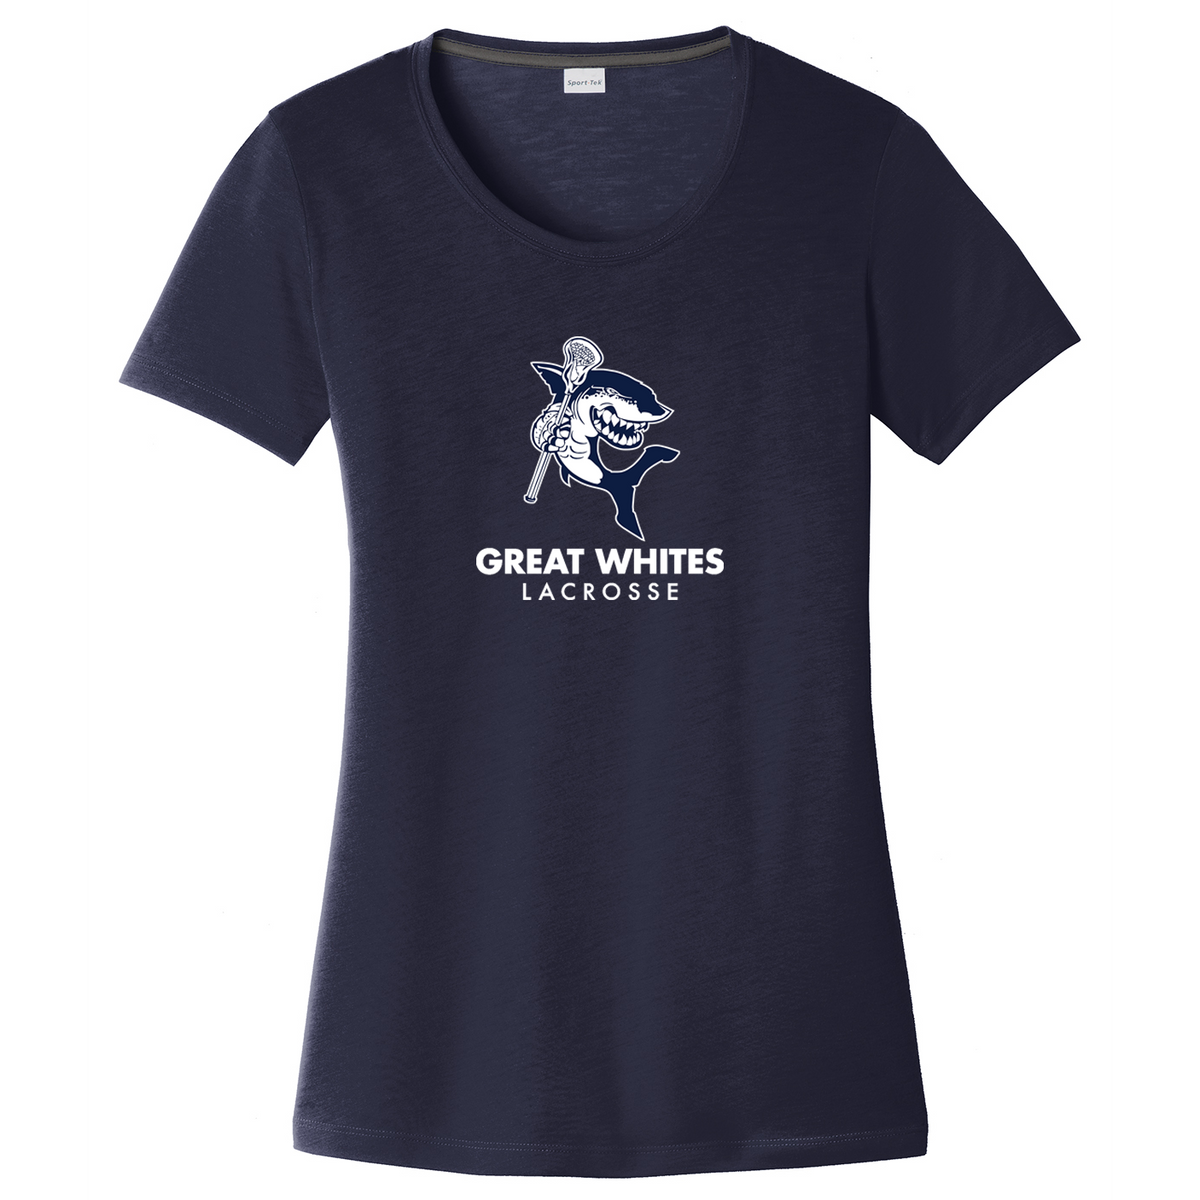 Great Whites Lacrosse Women's CottonTouch Performance T-Shirt